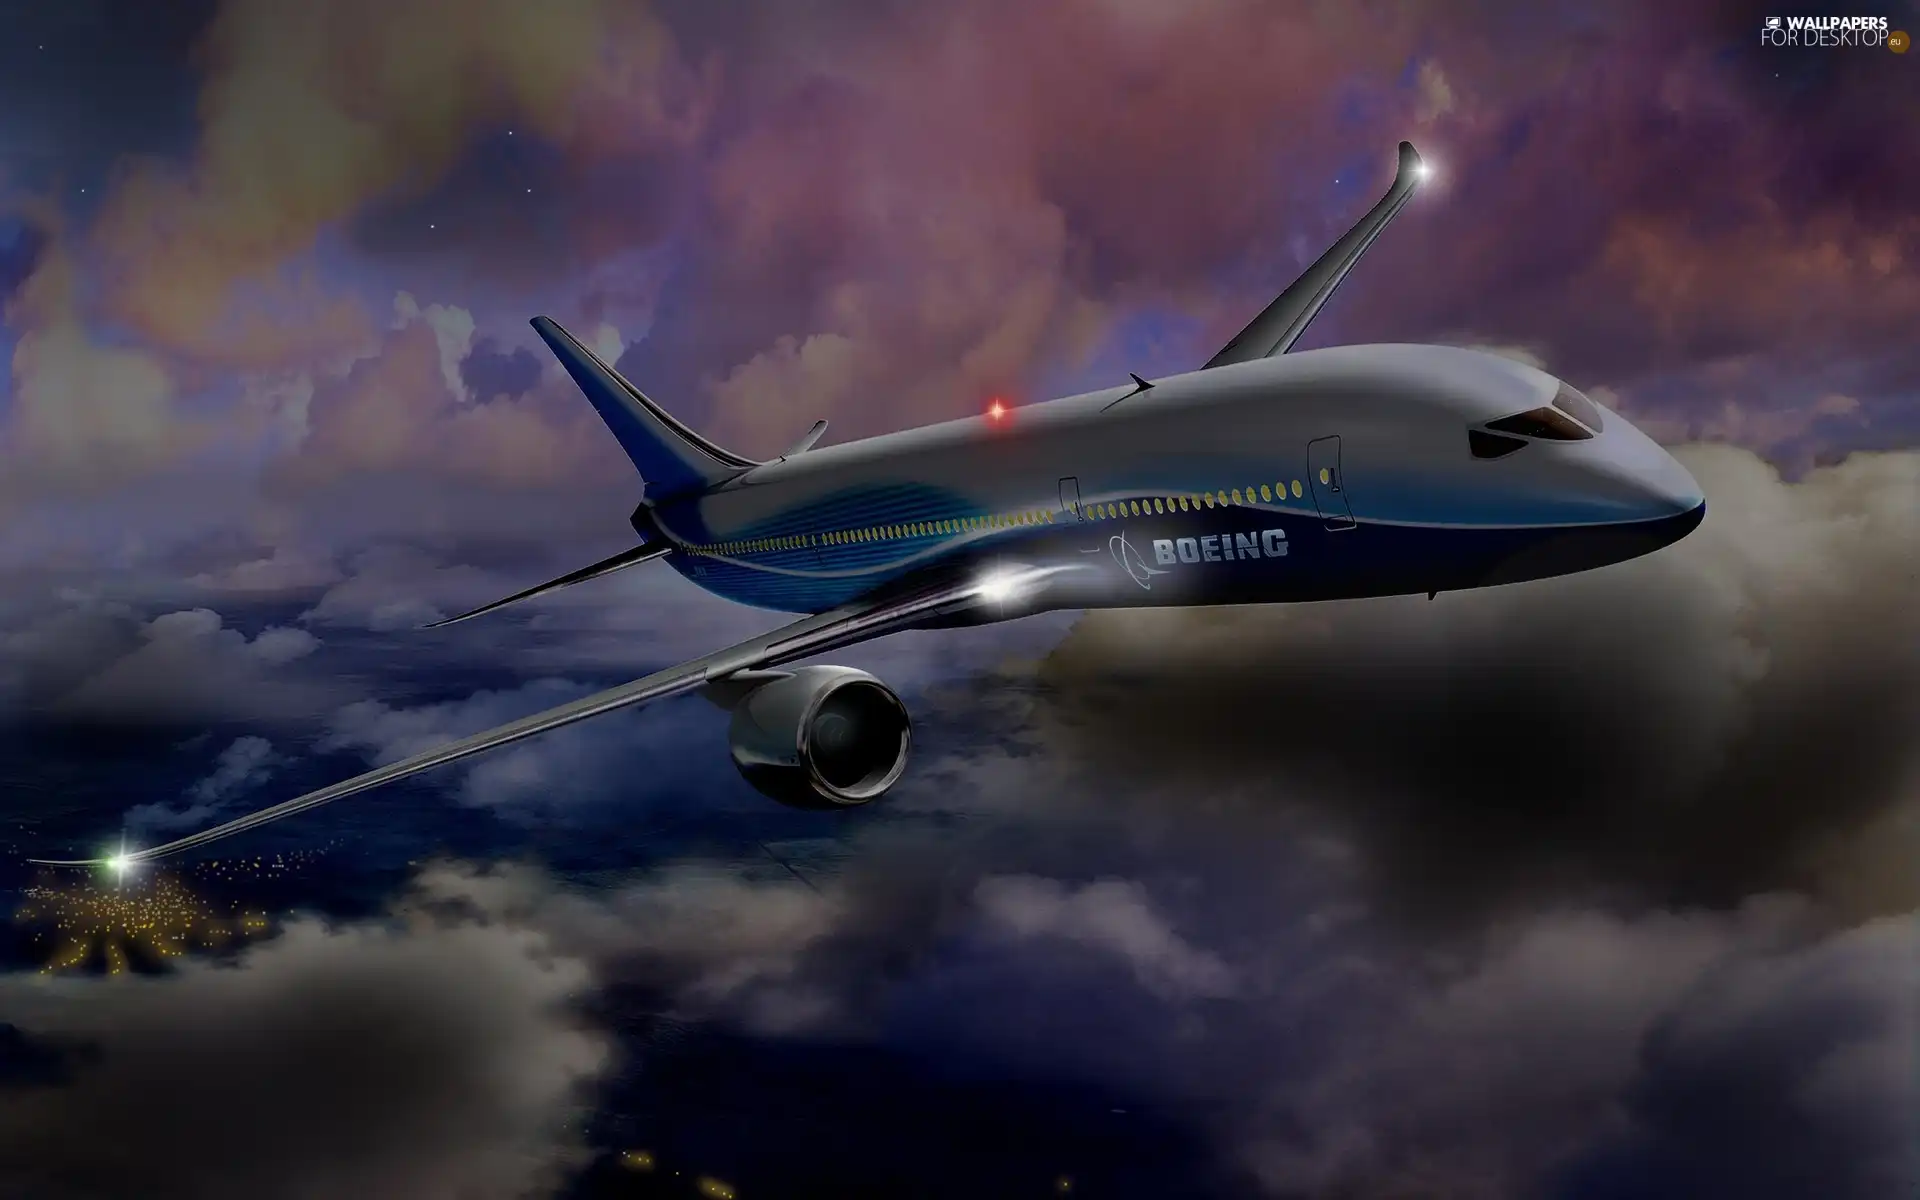 clouds, plane, Boeing